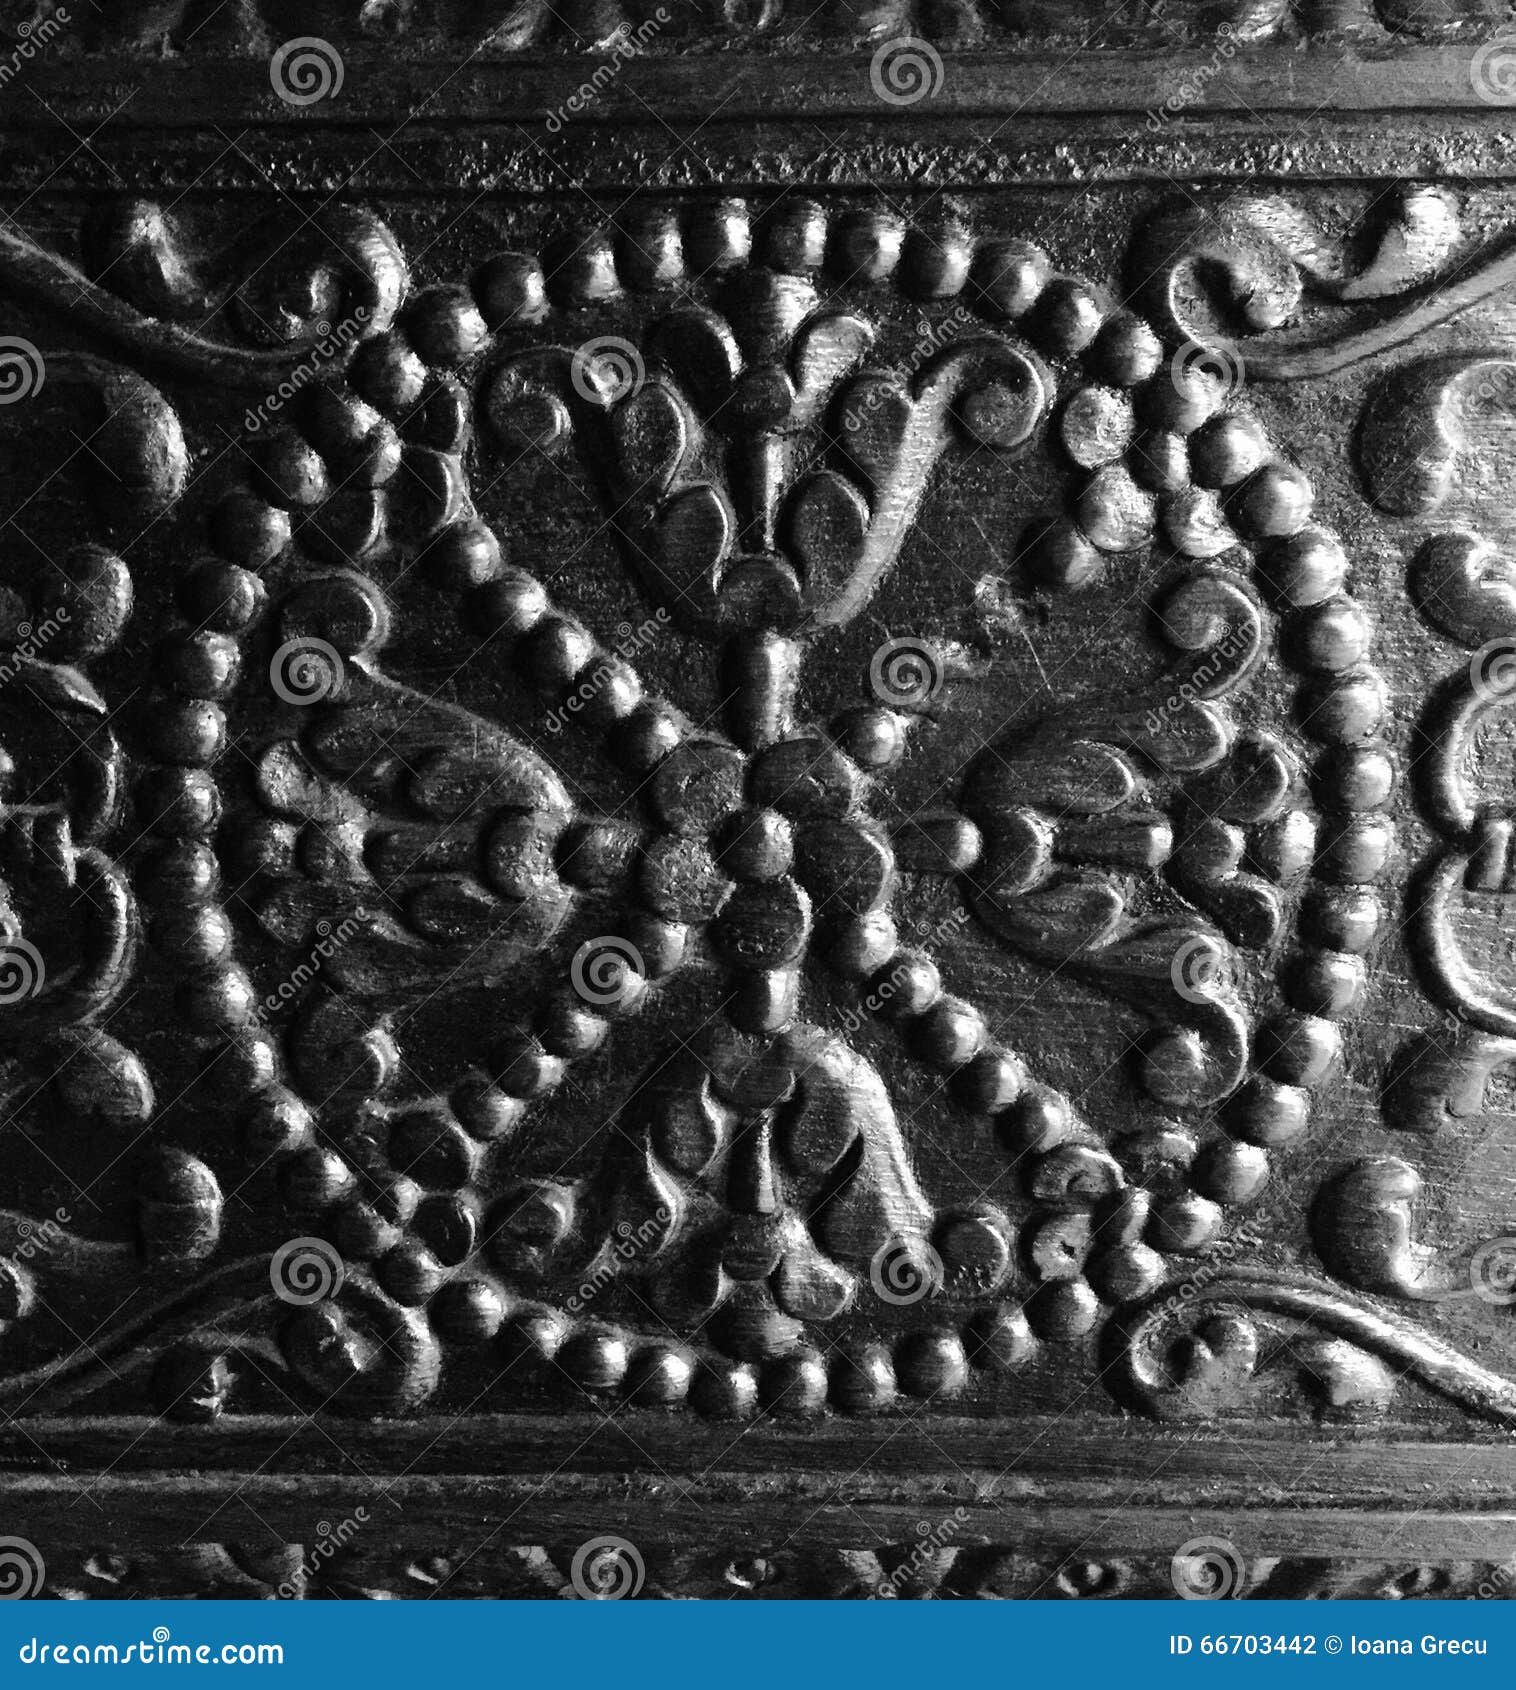 intricate craftsmanship on antique wood door